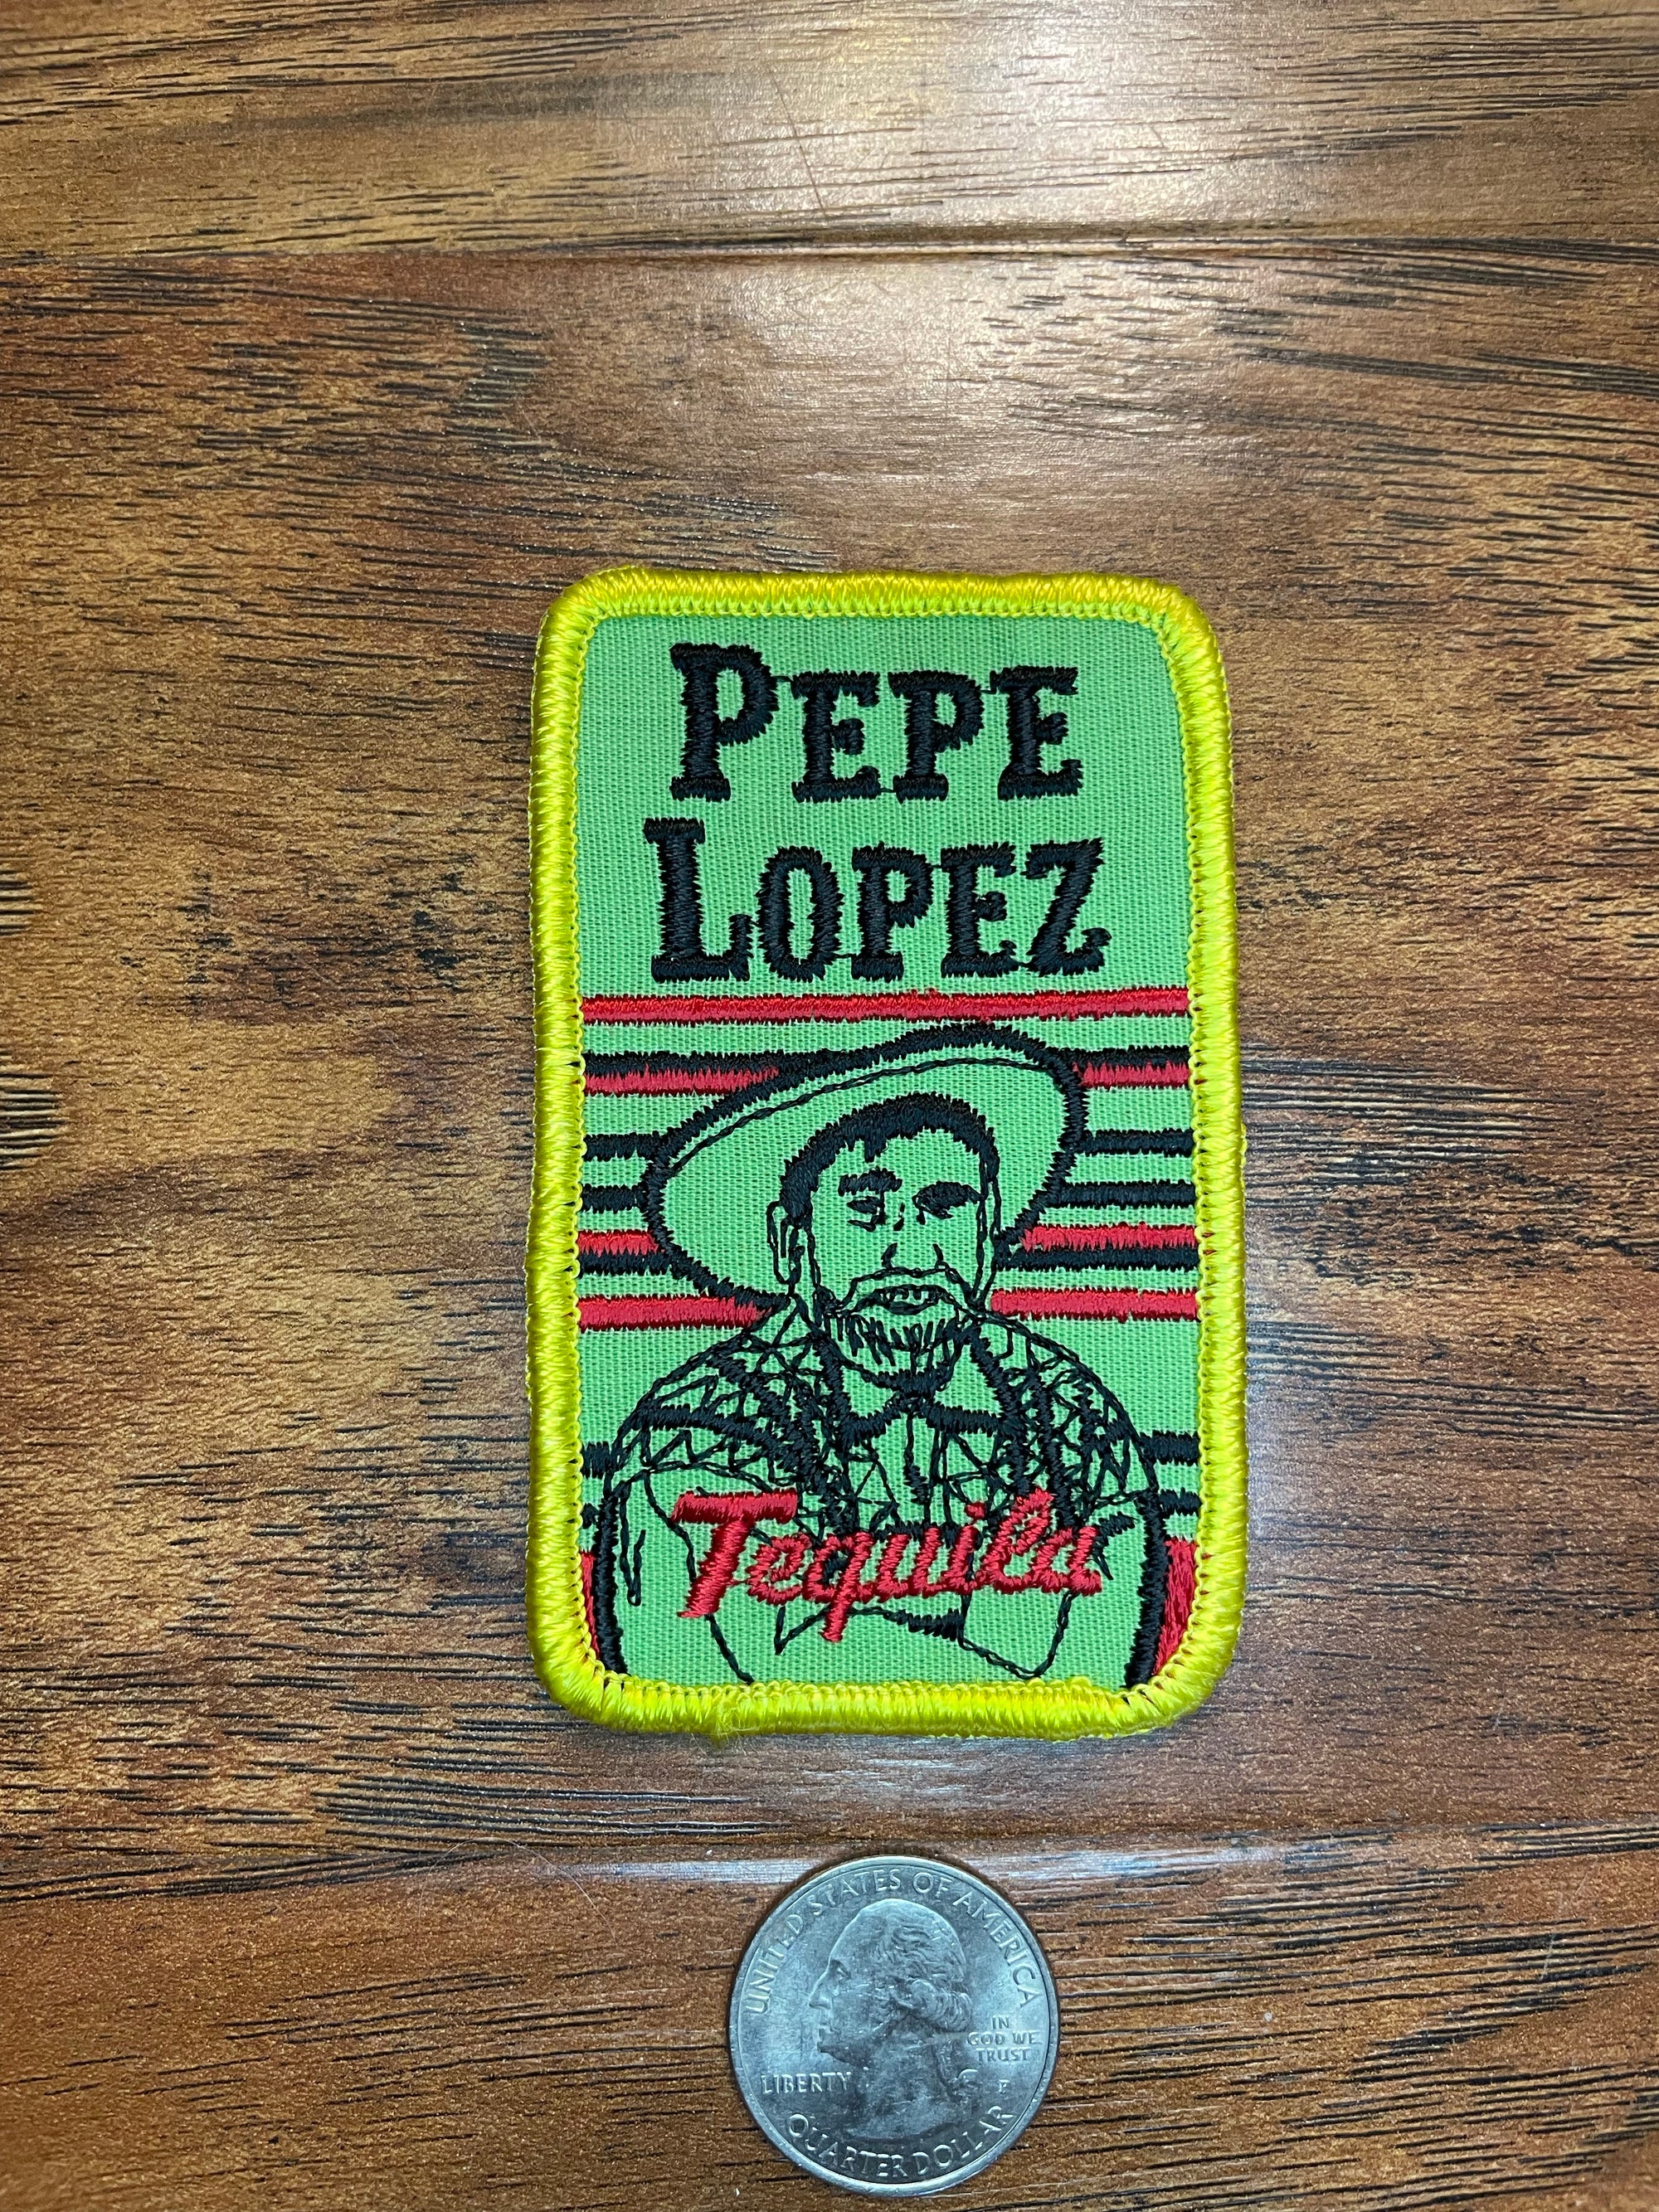 Vintage Pepe Lopez Tequila